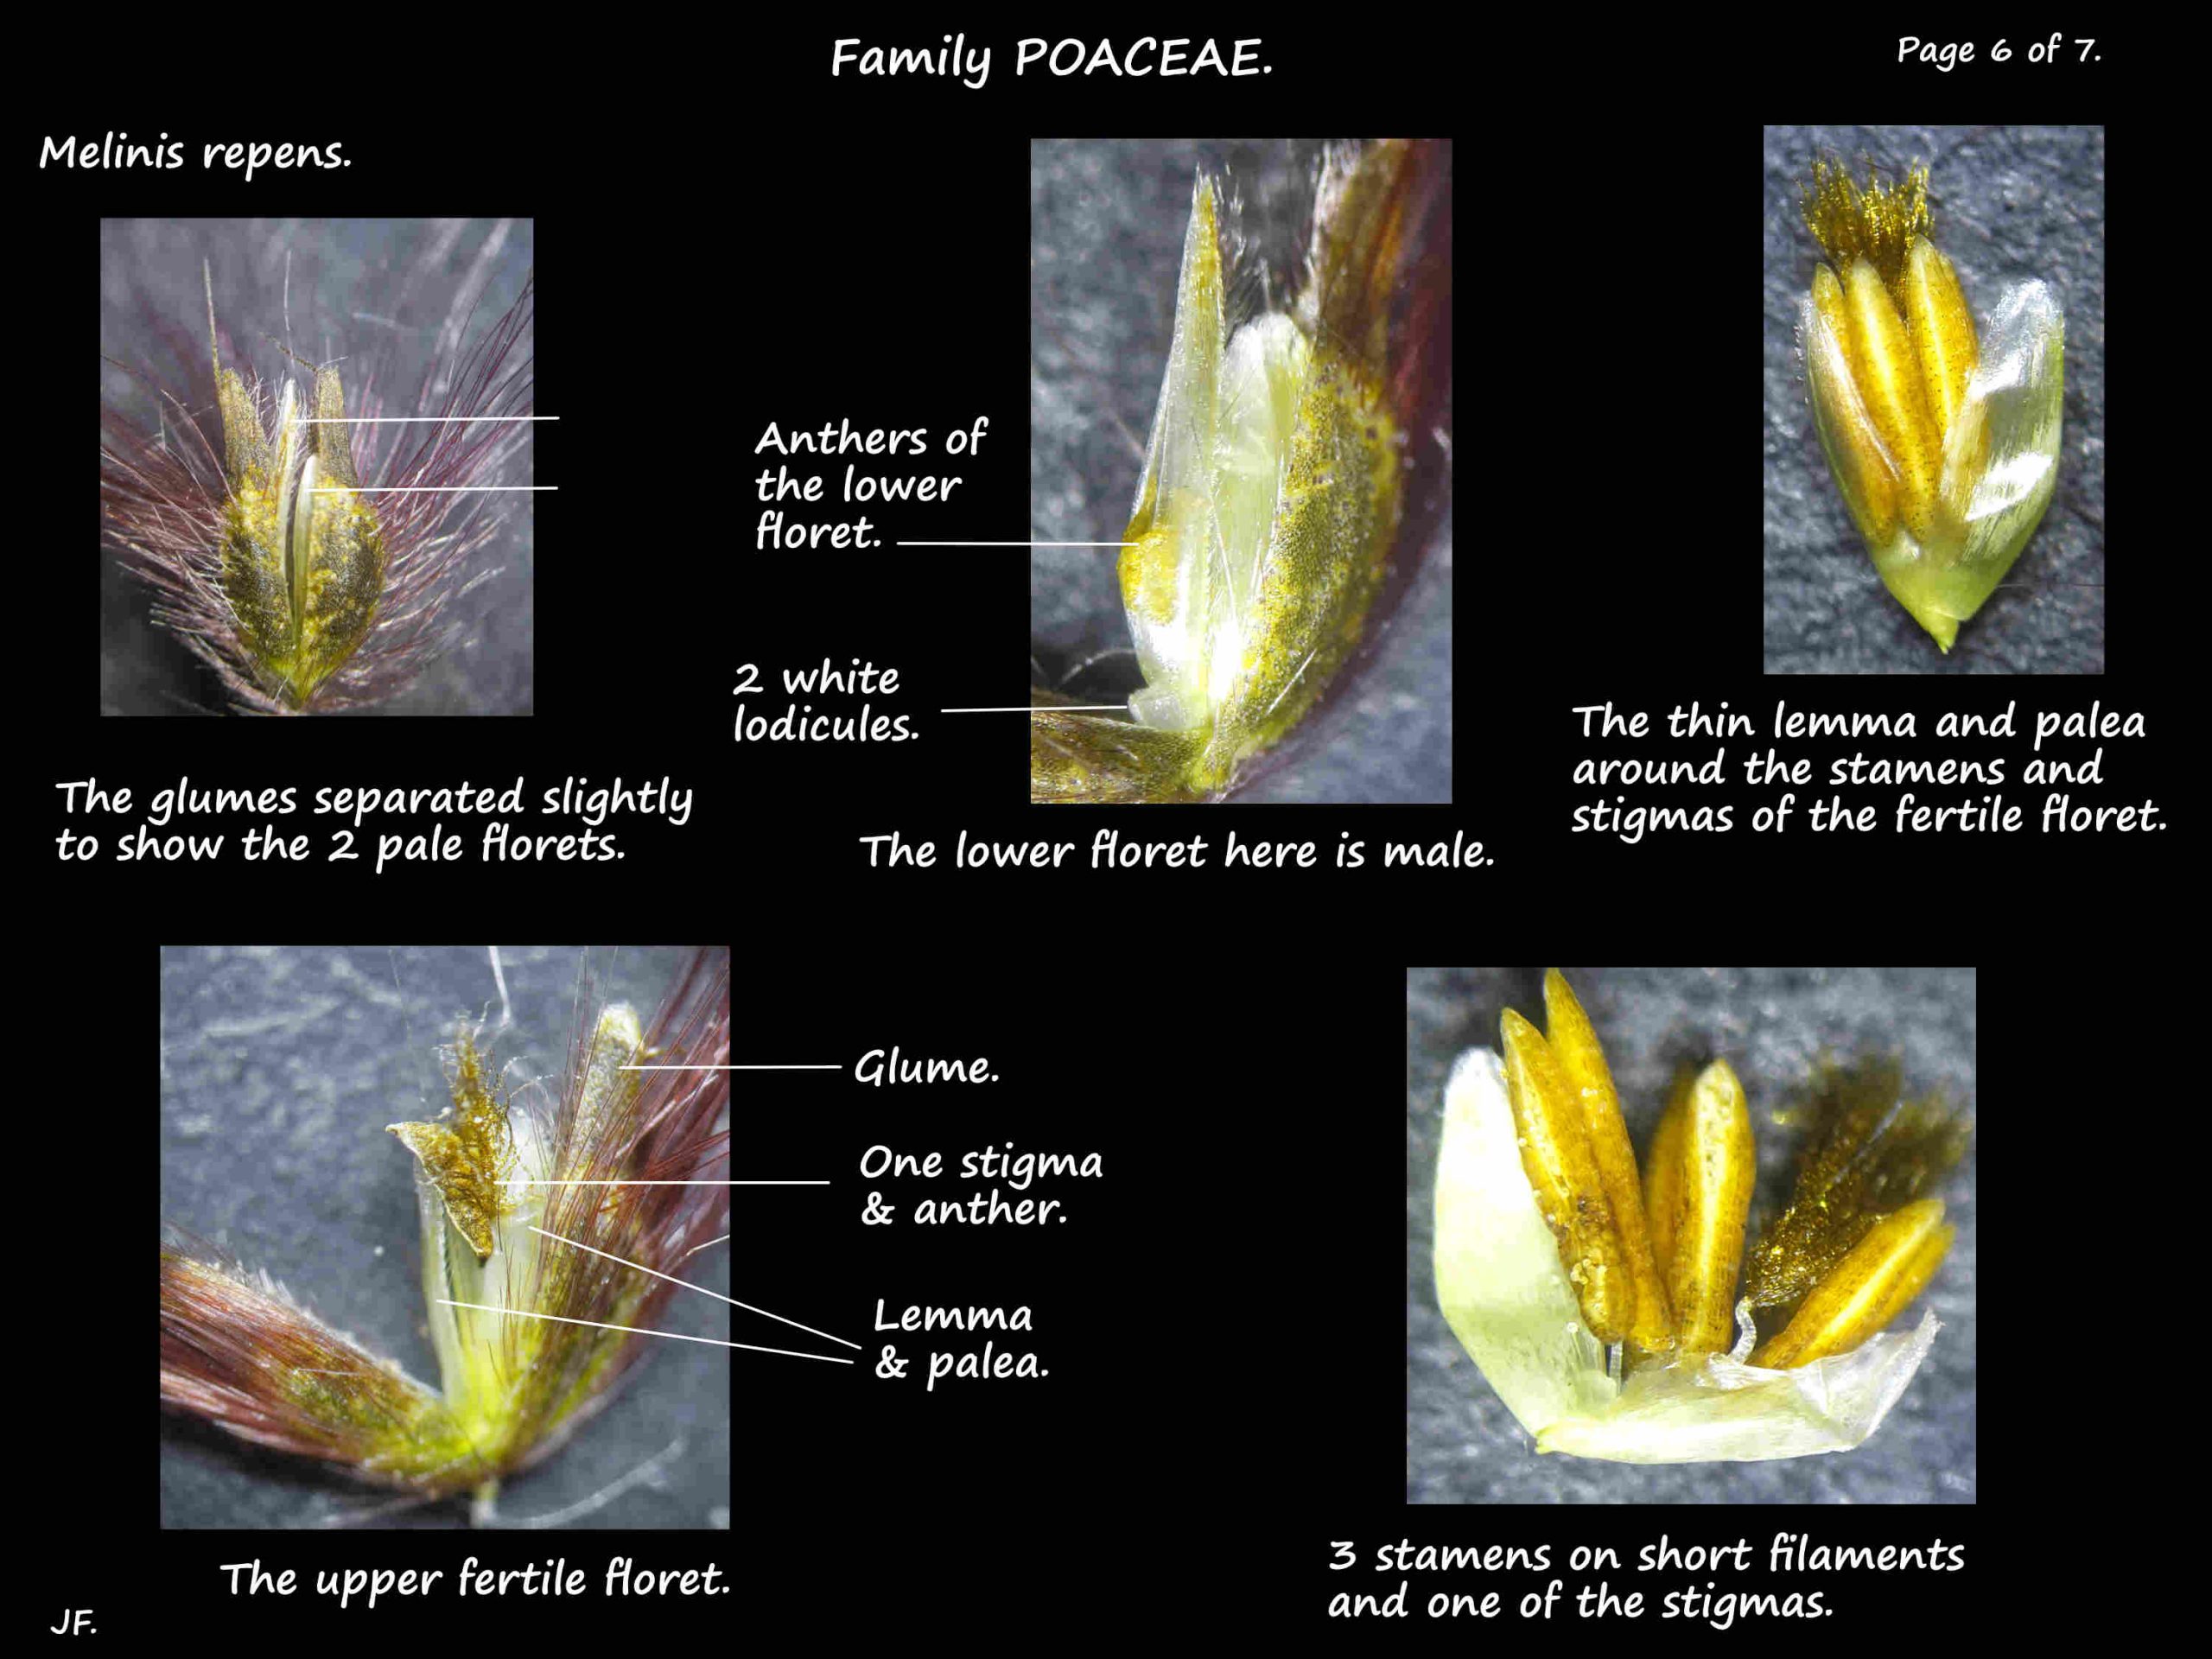 6 Male and fertile Melinis florets